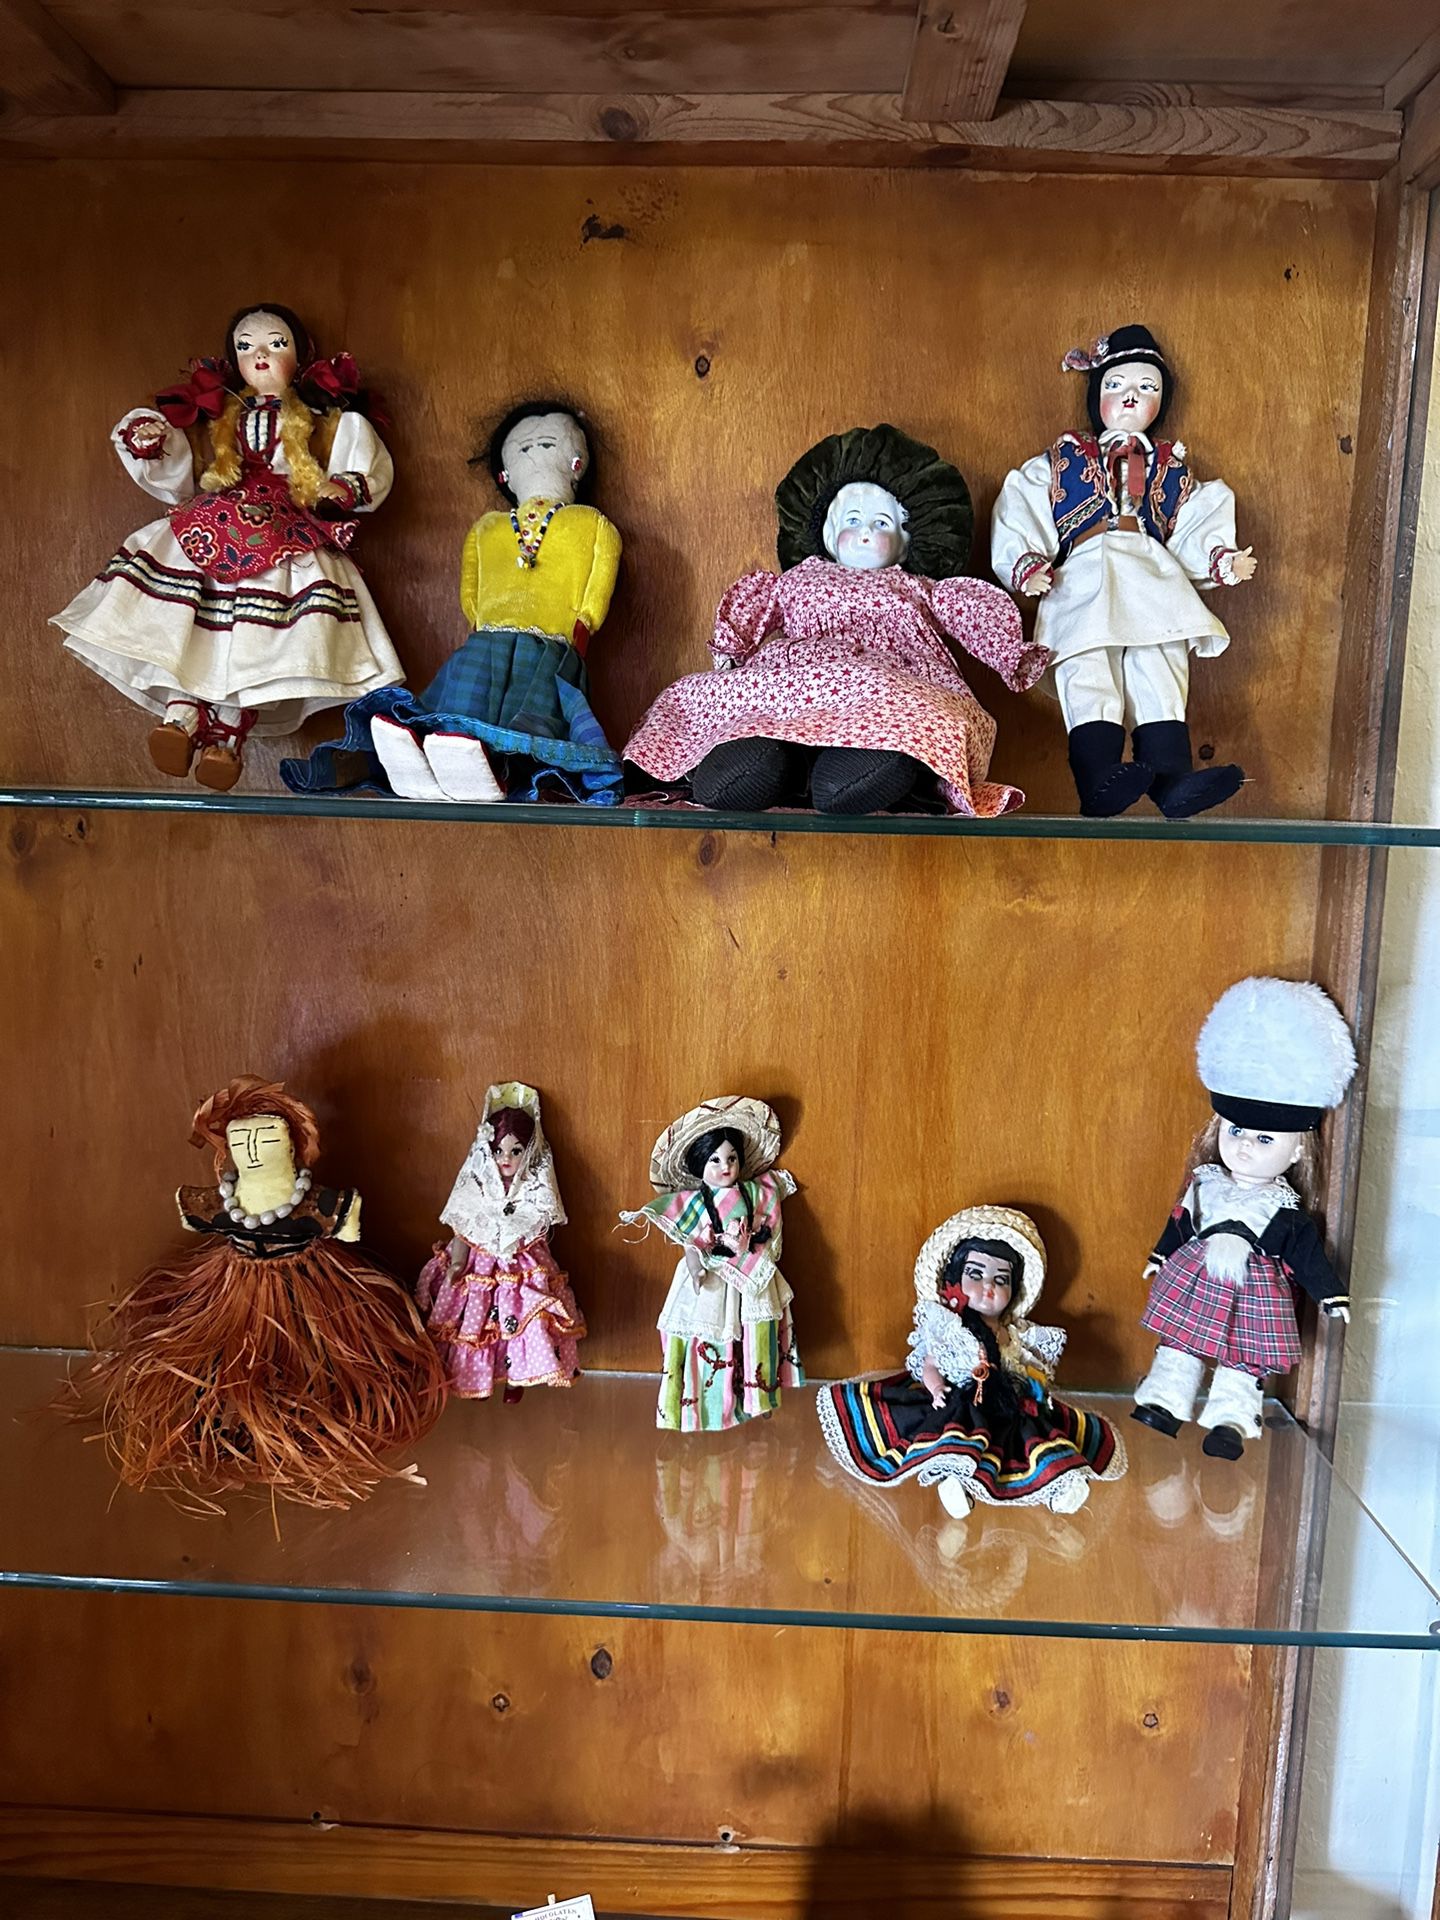 Lot of 9 Vintage Dolls - Many International